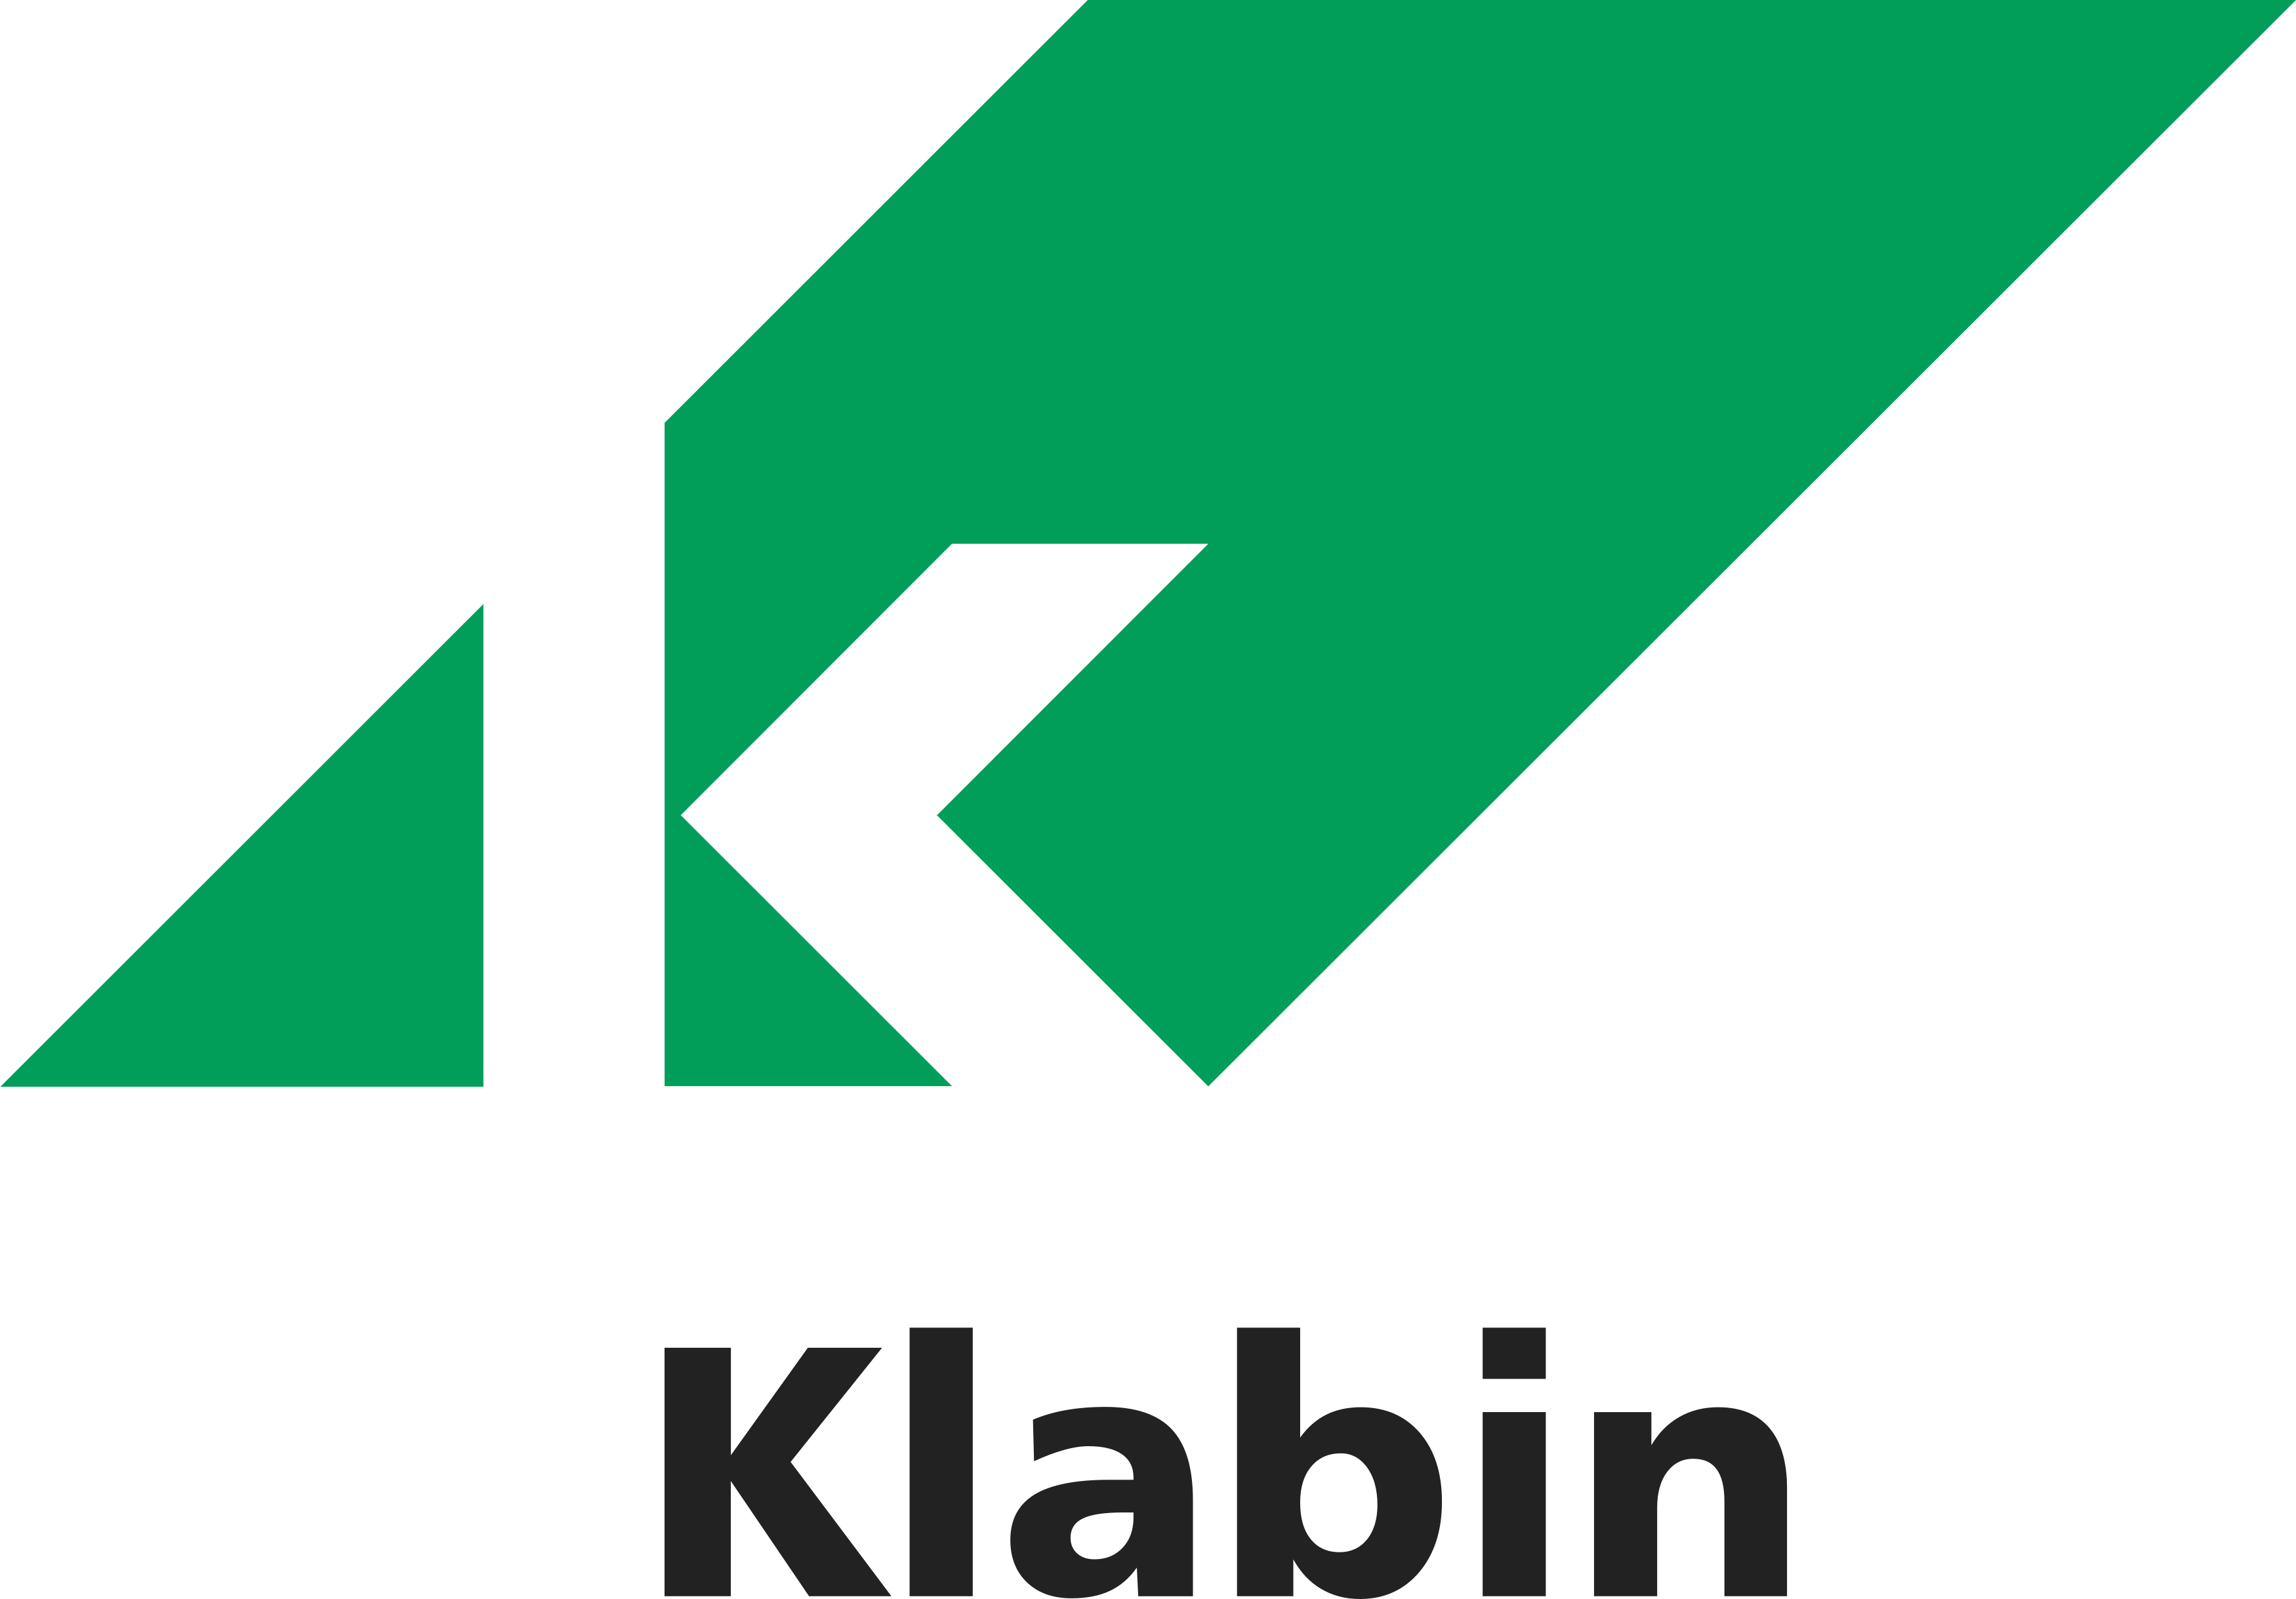 klabin-logo